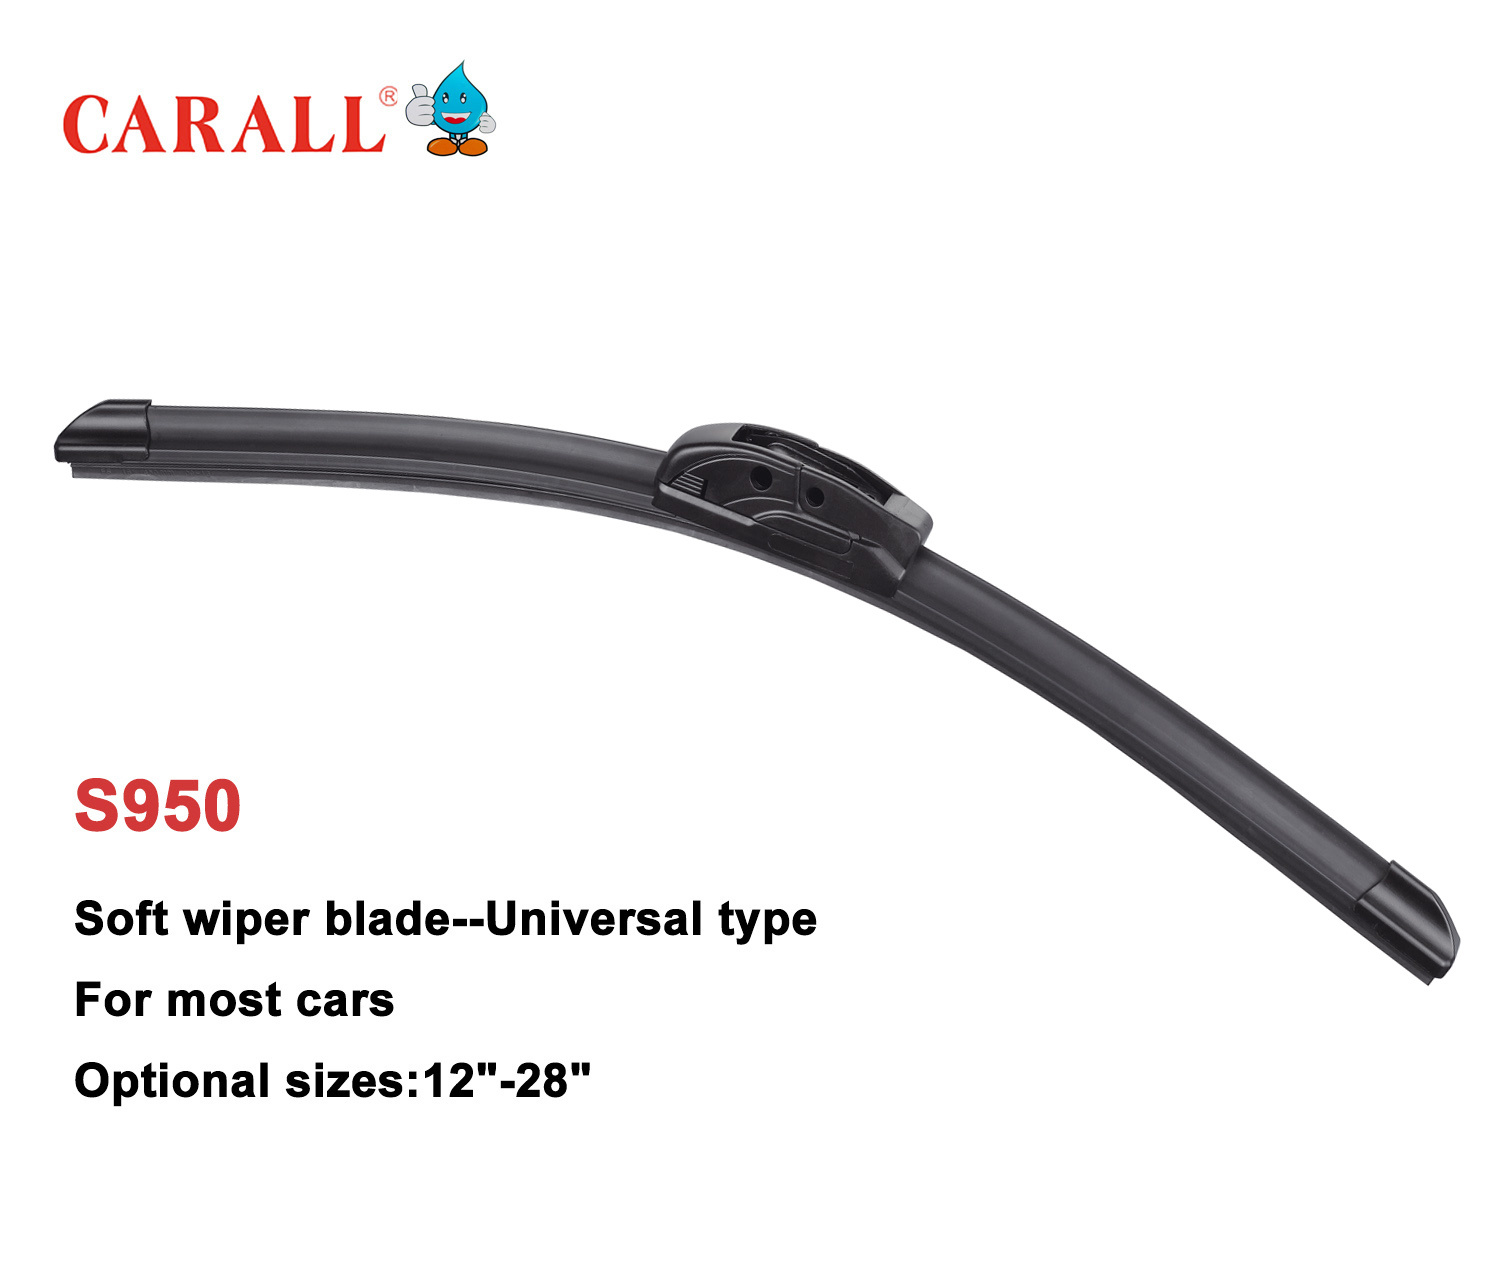 3 in 1 Soft Wiper Blade, Universal Type (S950)